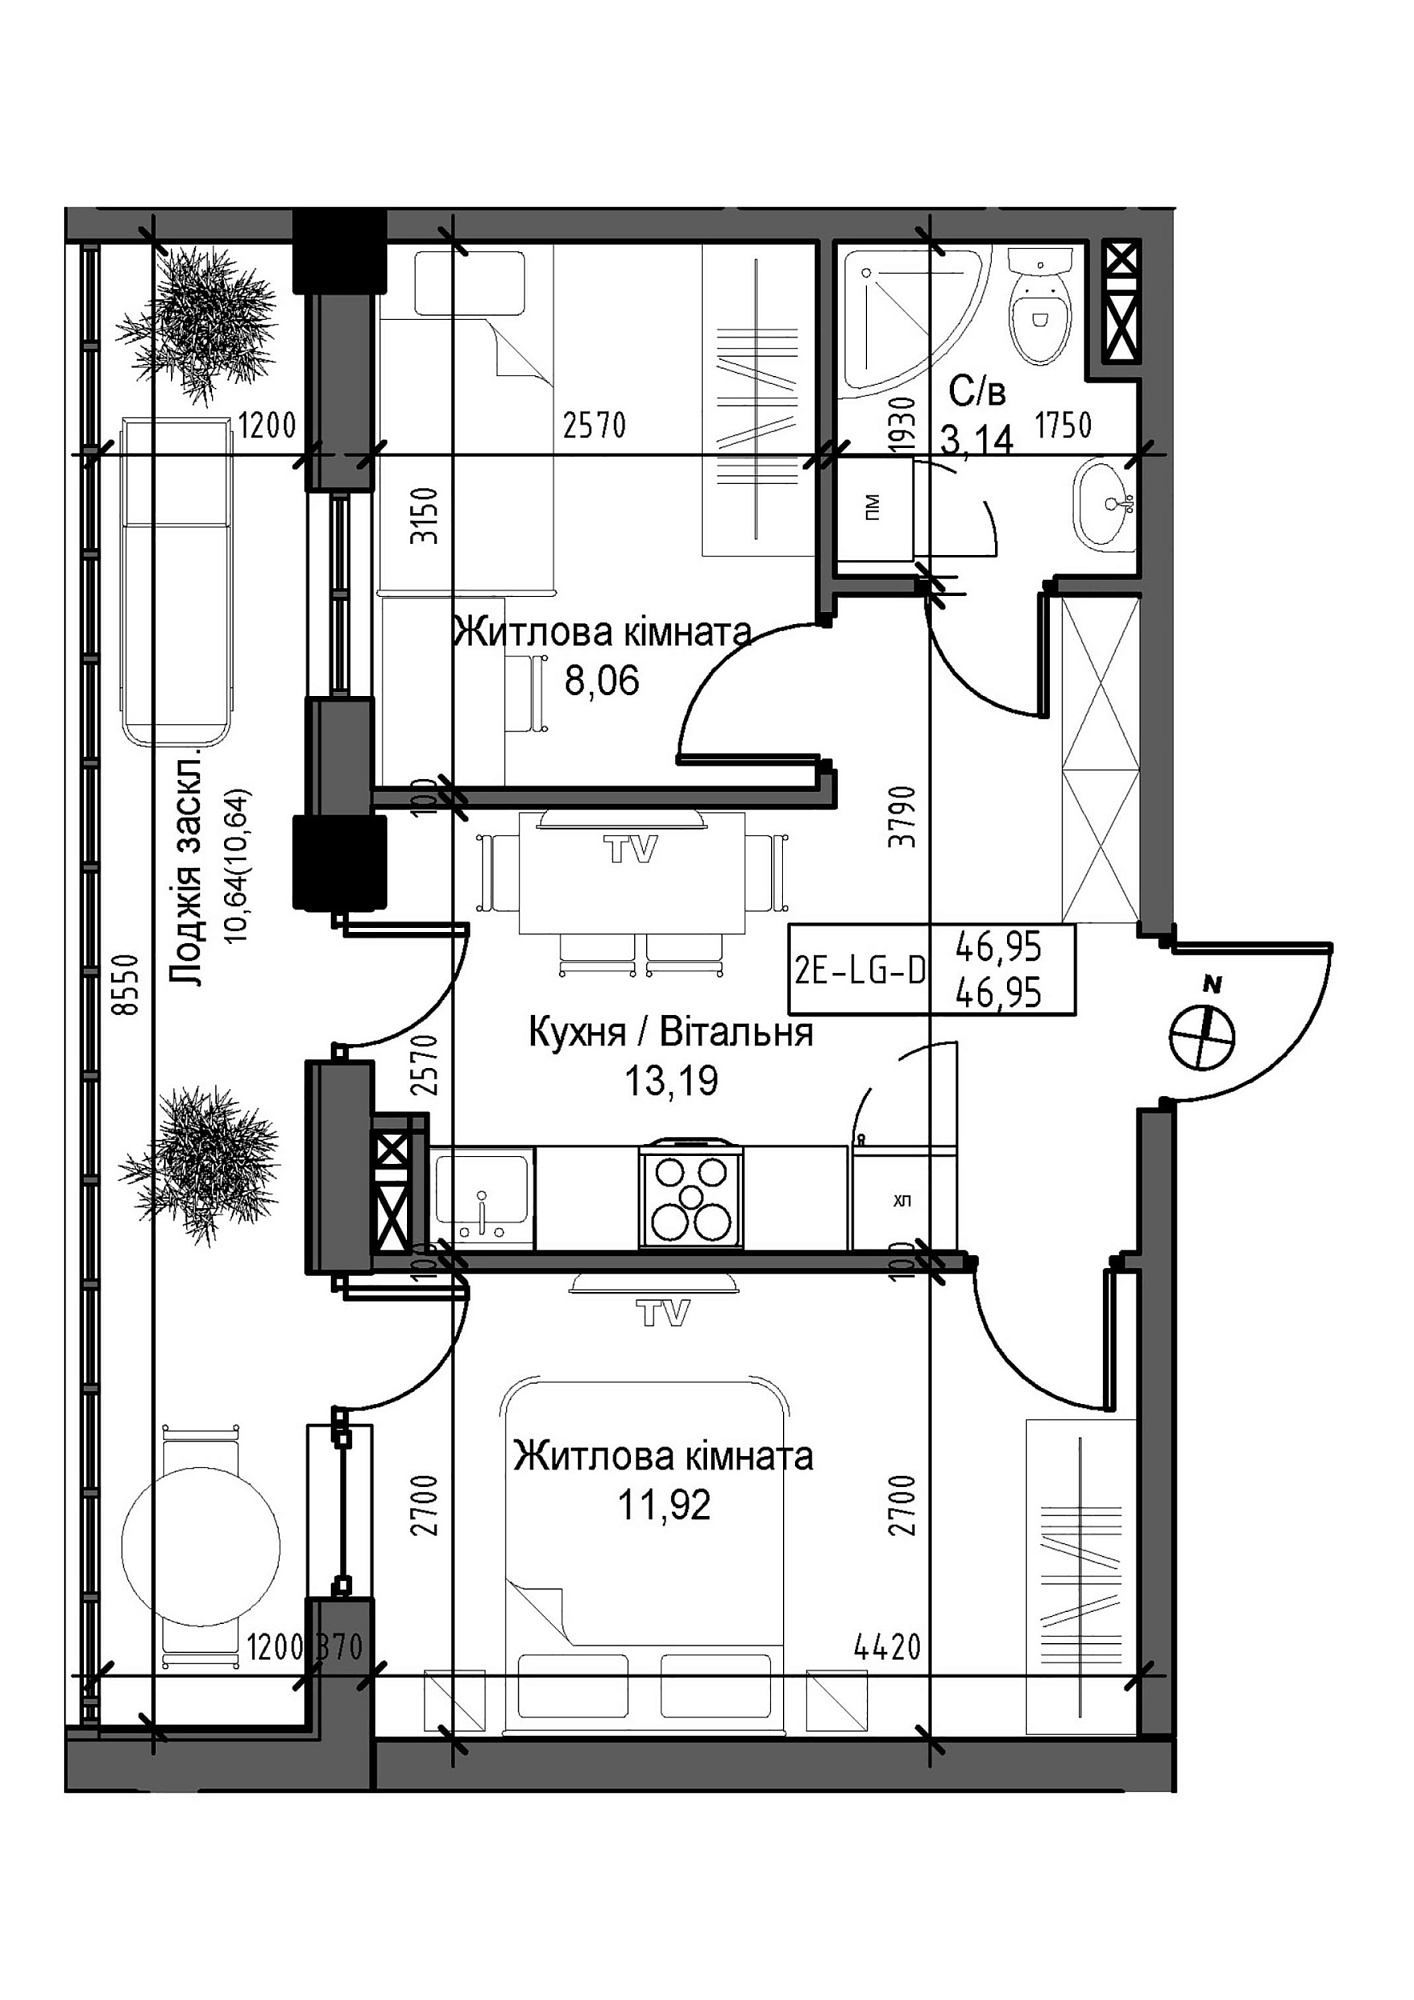 Планування 2-к квартира площею 46.95м2, UM-007-03/0001.